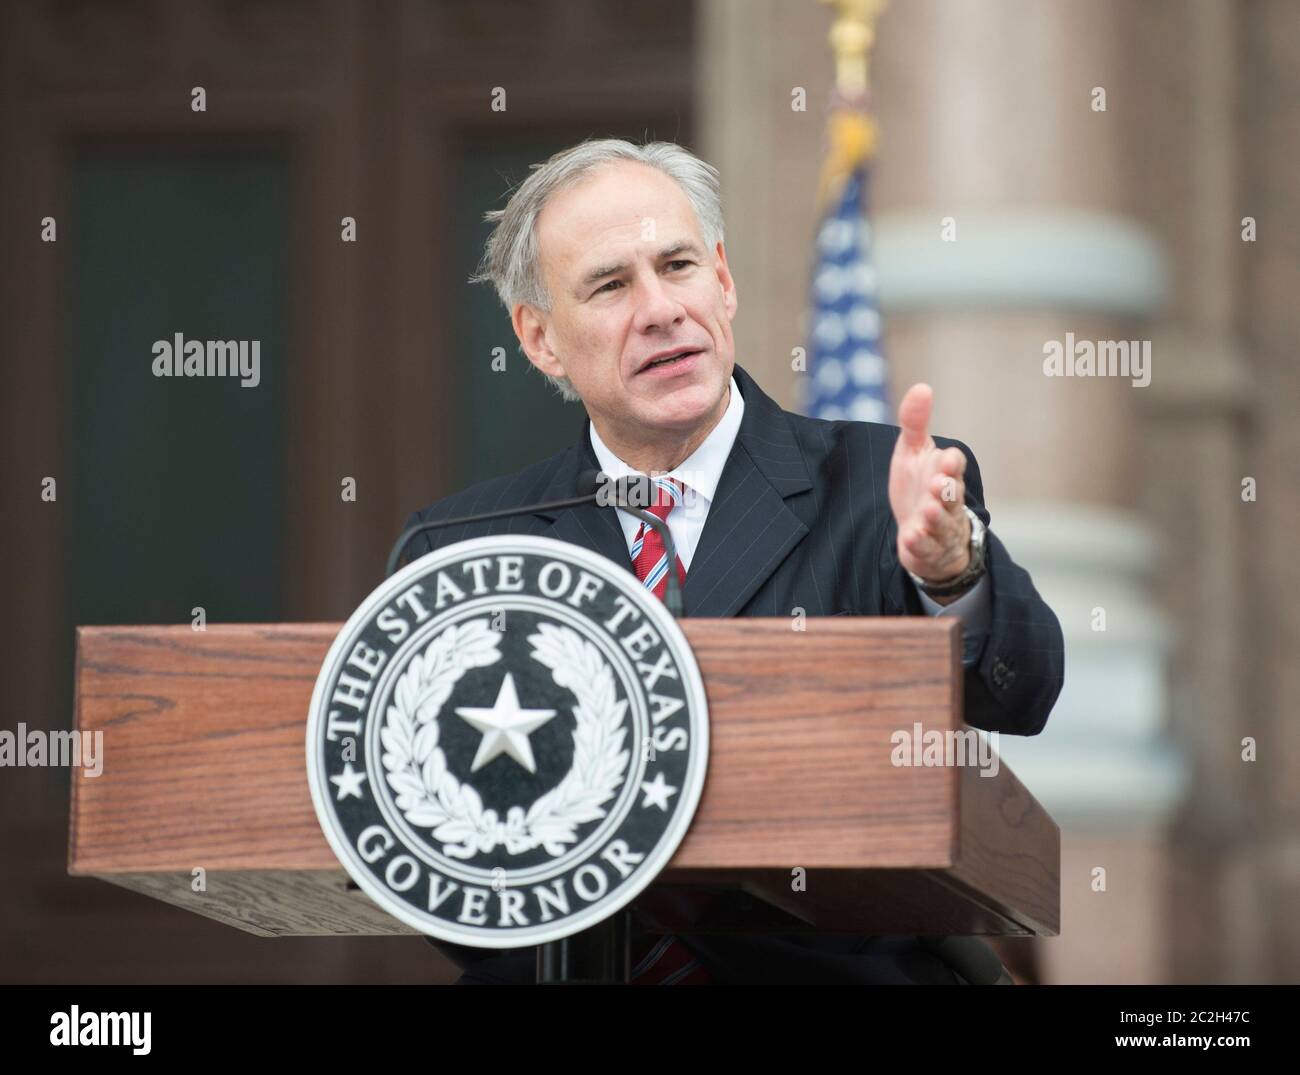 Austin Texas USA, November 11 2015: Texas Gov. Greg Abbott speaks during the annual Veterans Day ceremony at the Texas Capitol.  ©Bob Daemmrich Stock Photo